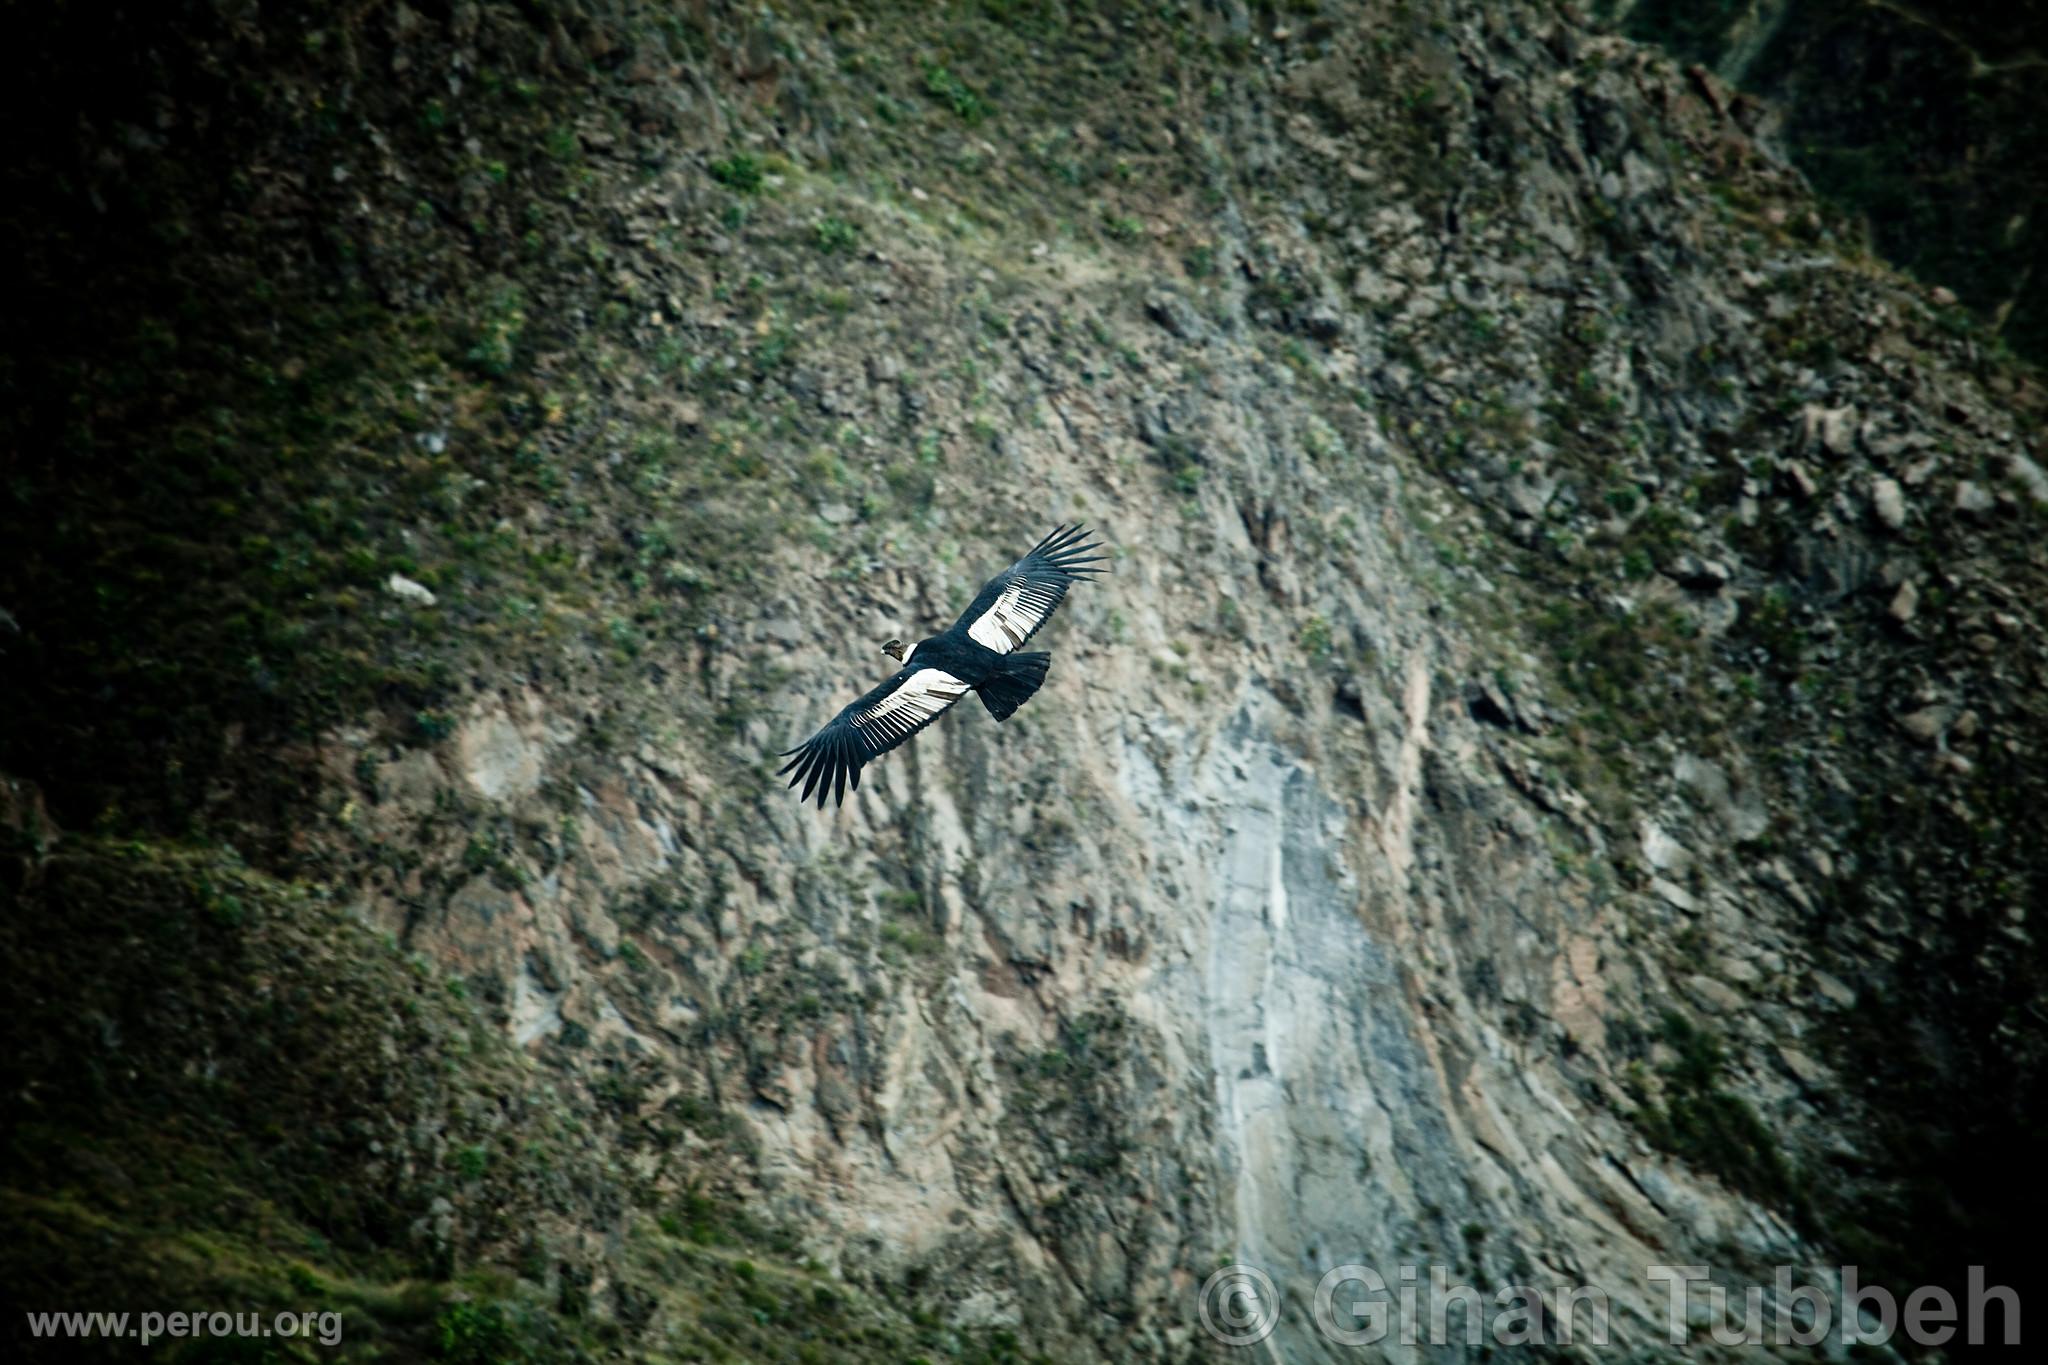 Condor andin